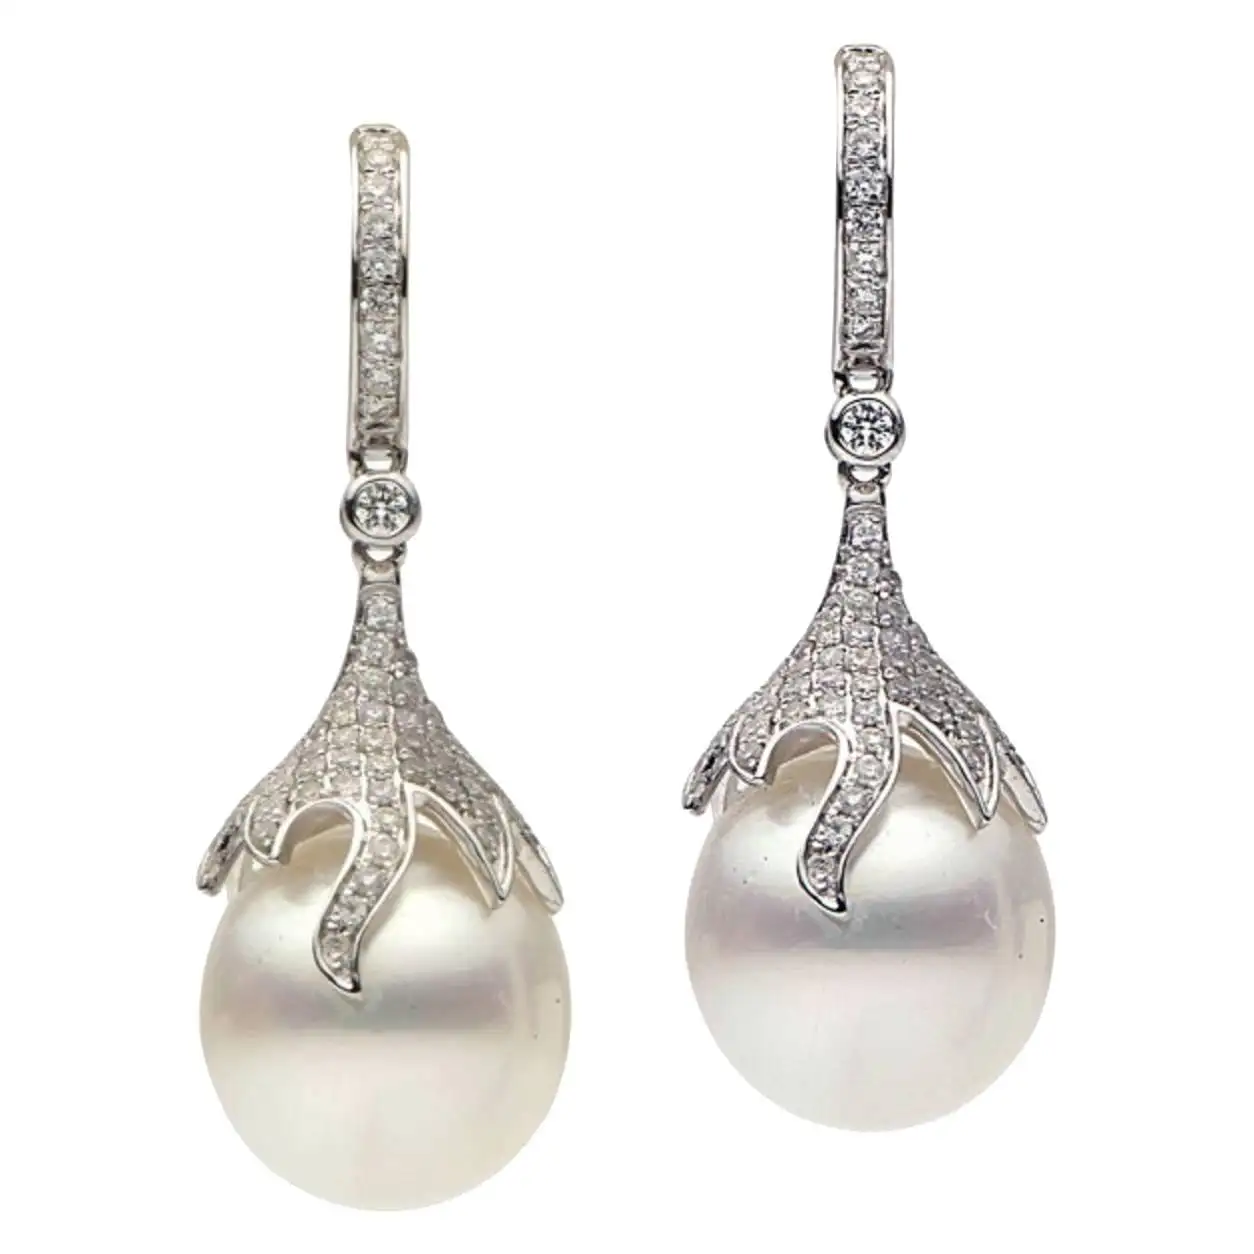 South-Sea-Pearl-Diamond-Drop-Earrings-0.73-Carats-12-13-MM-18K-White-Gold-1.webp